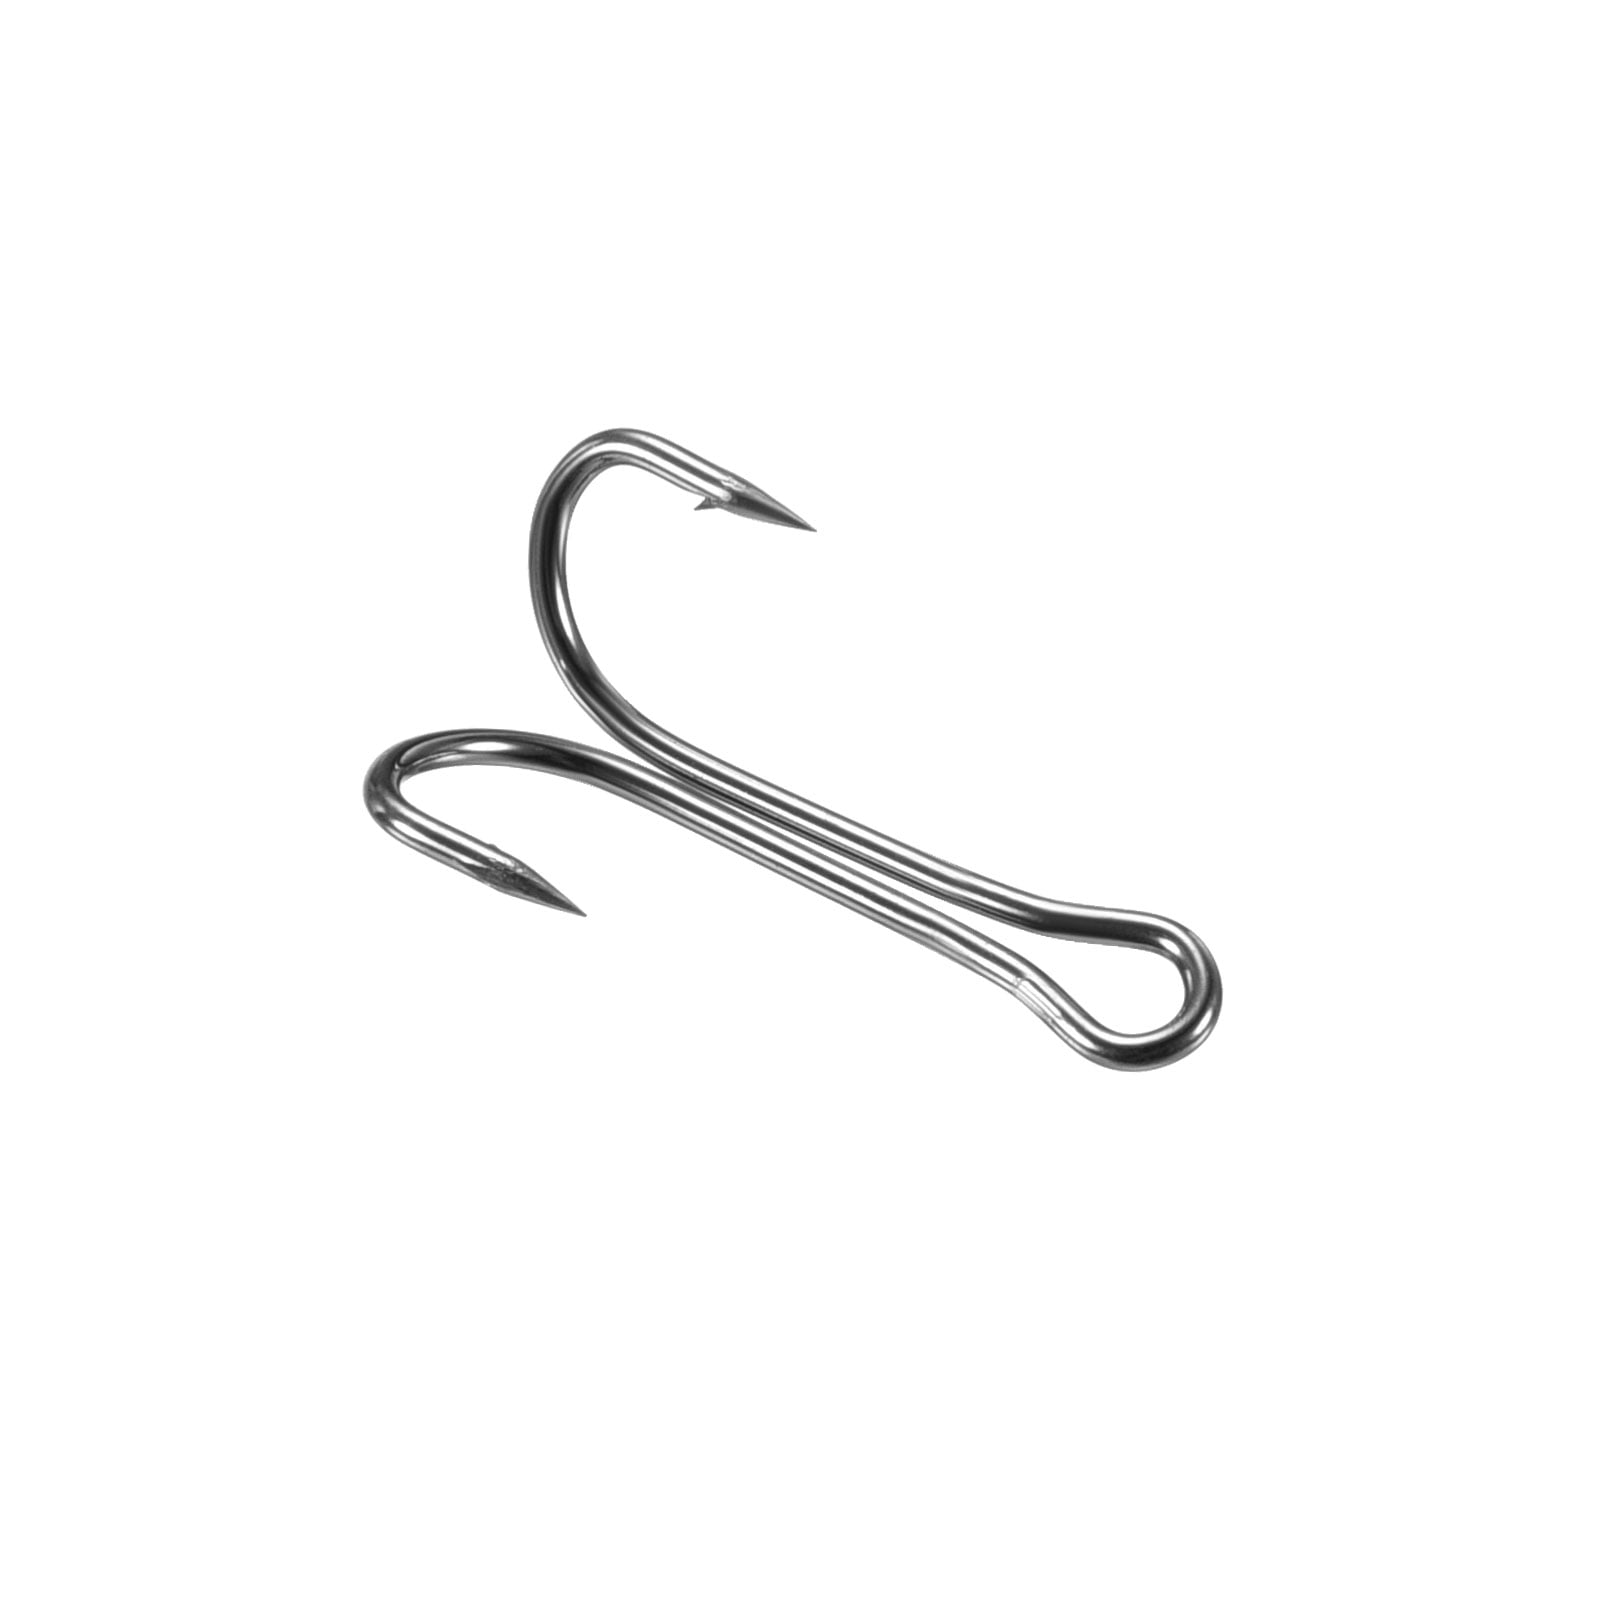 4# 0.94 Carbon Steel Double Fish Hooks Sharp Barbed Frog Hook